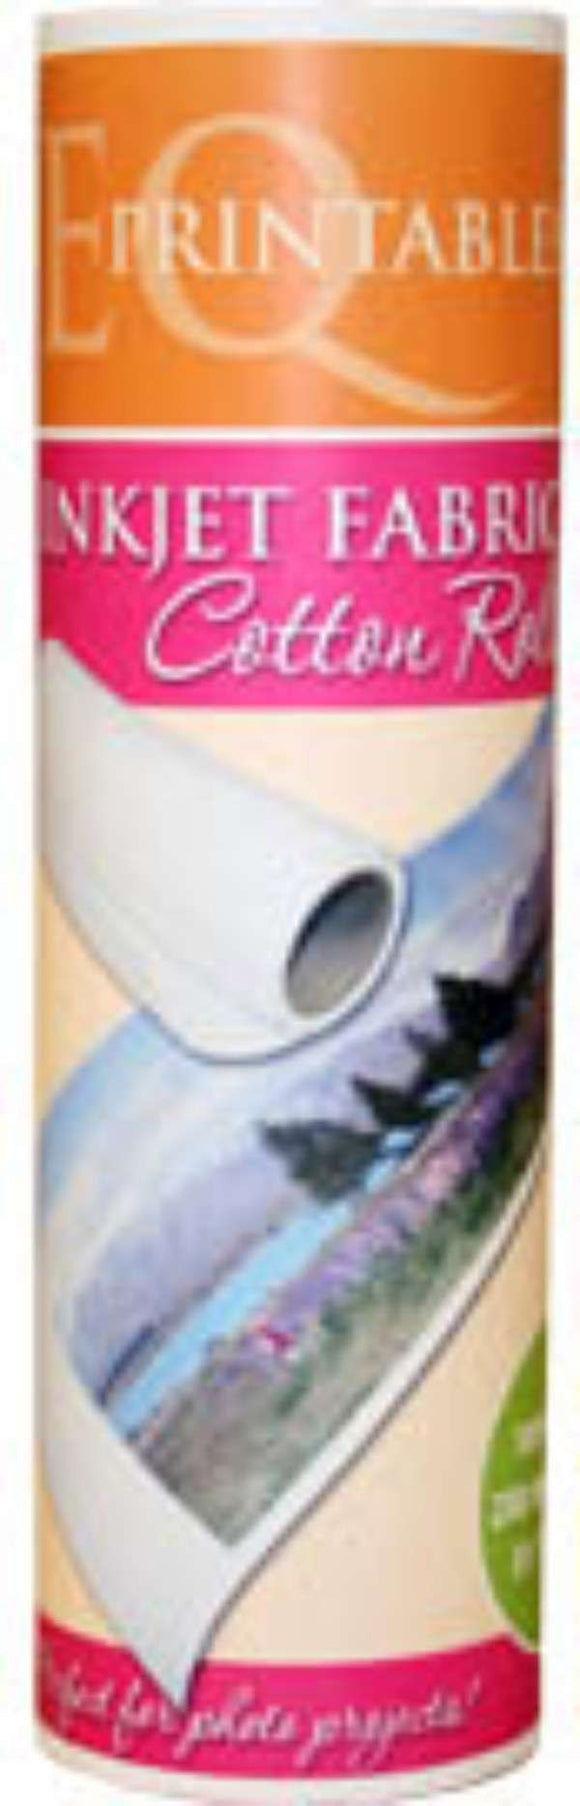 Cotton Printable Fabric Roll